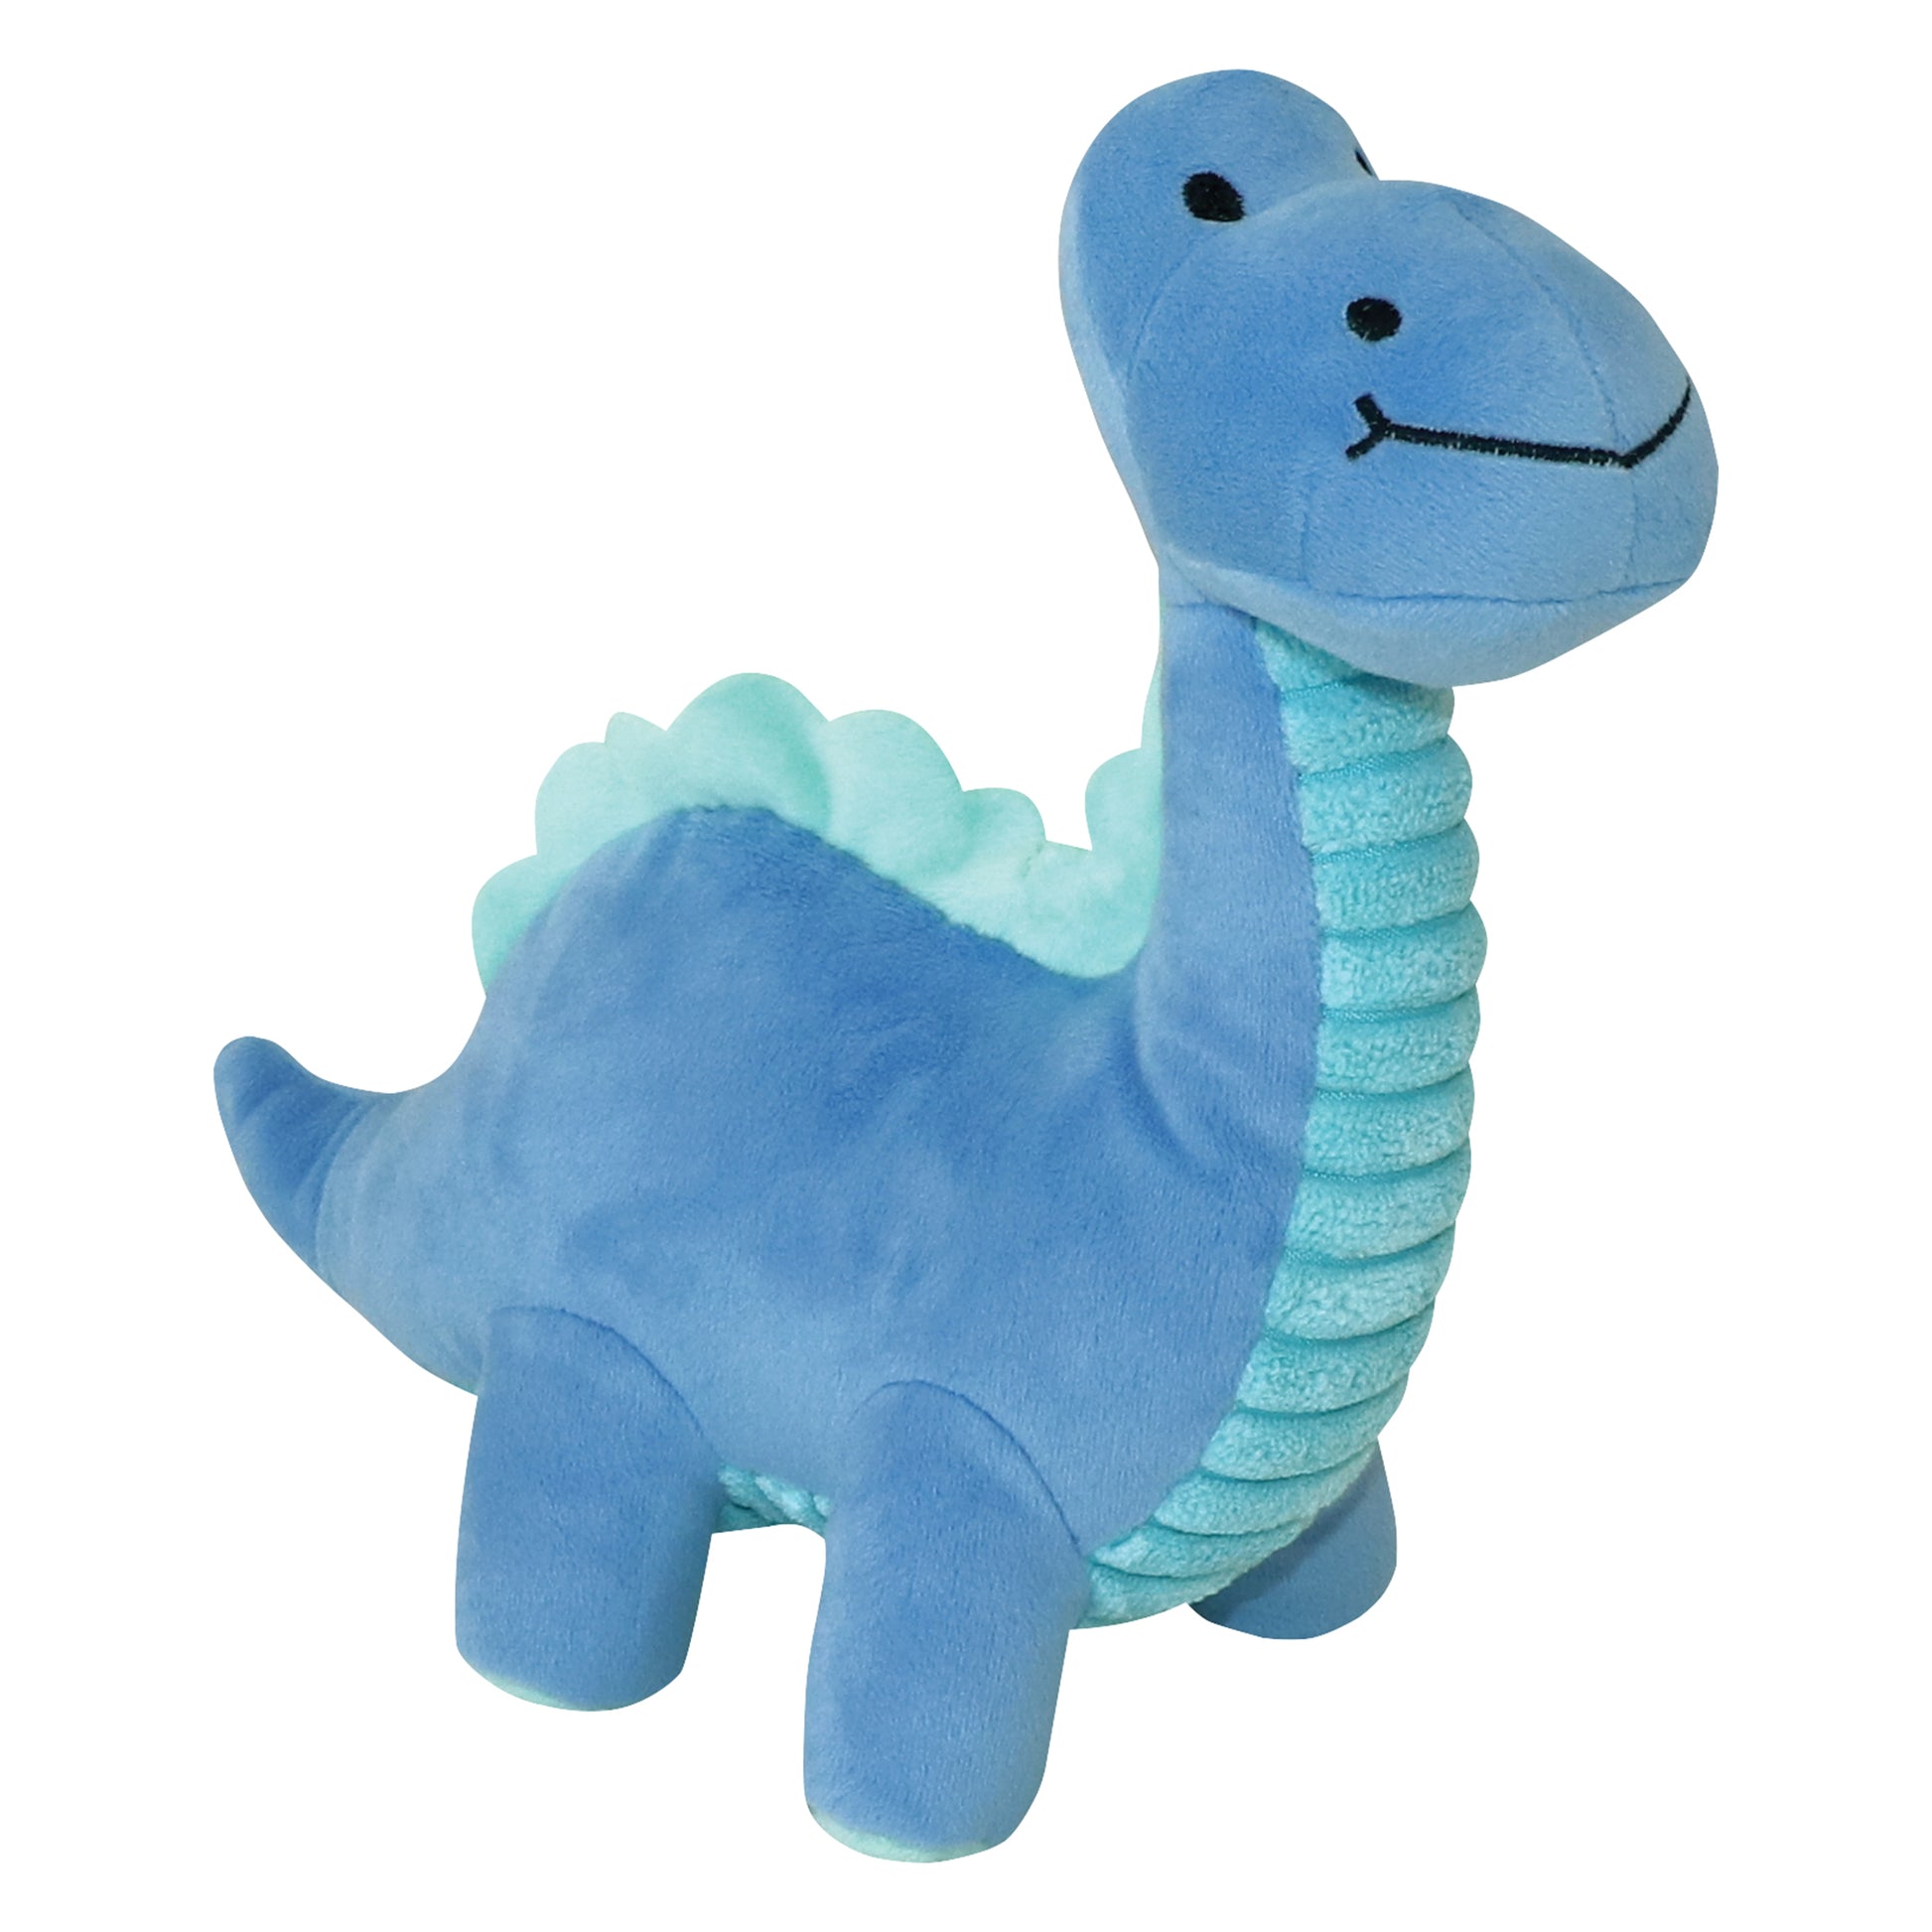  Sammy and Lou Dinosaur Pals 4 Piece Crib Bedding; blue dinosaur plush toy angled view 